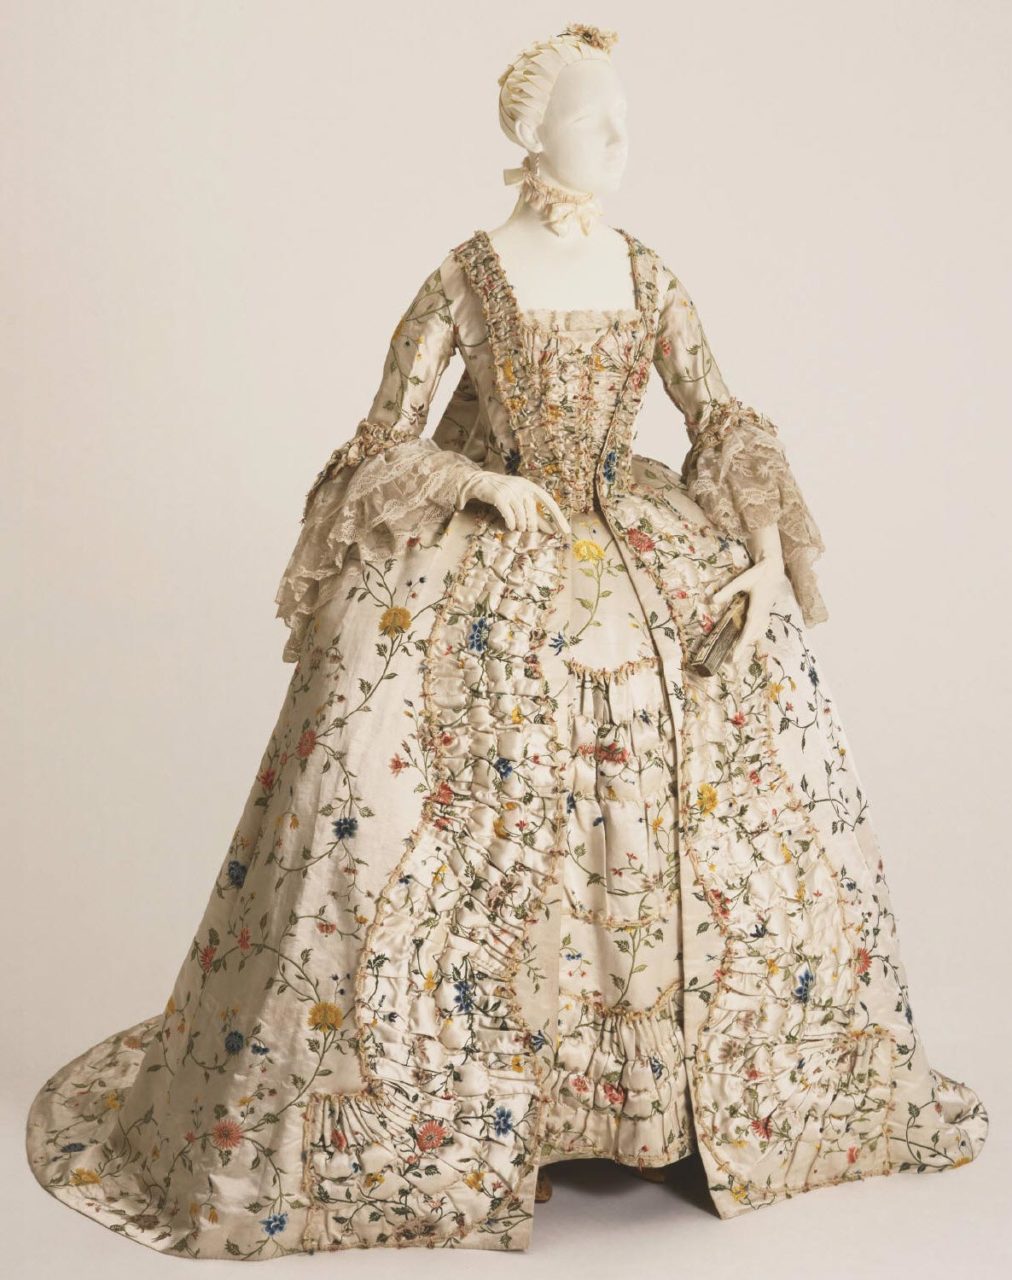 Woman's dress (Robe à la française) with Matching Stomacher and Petticoat